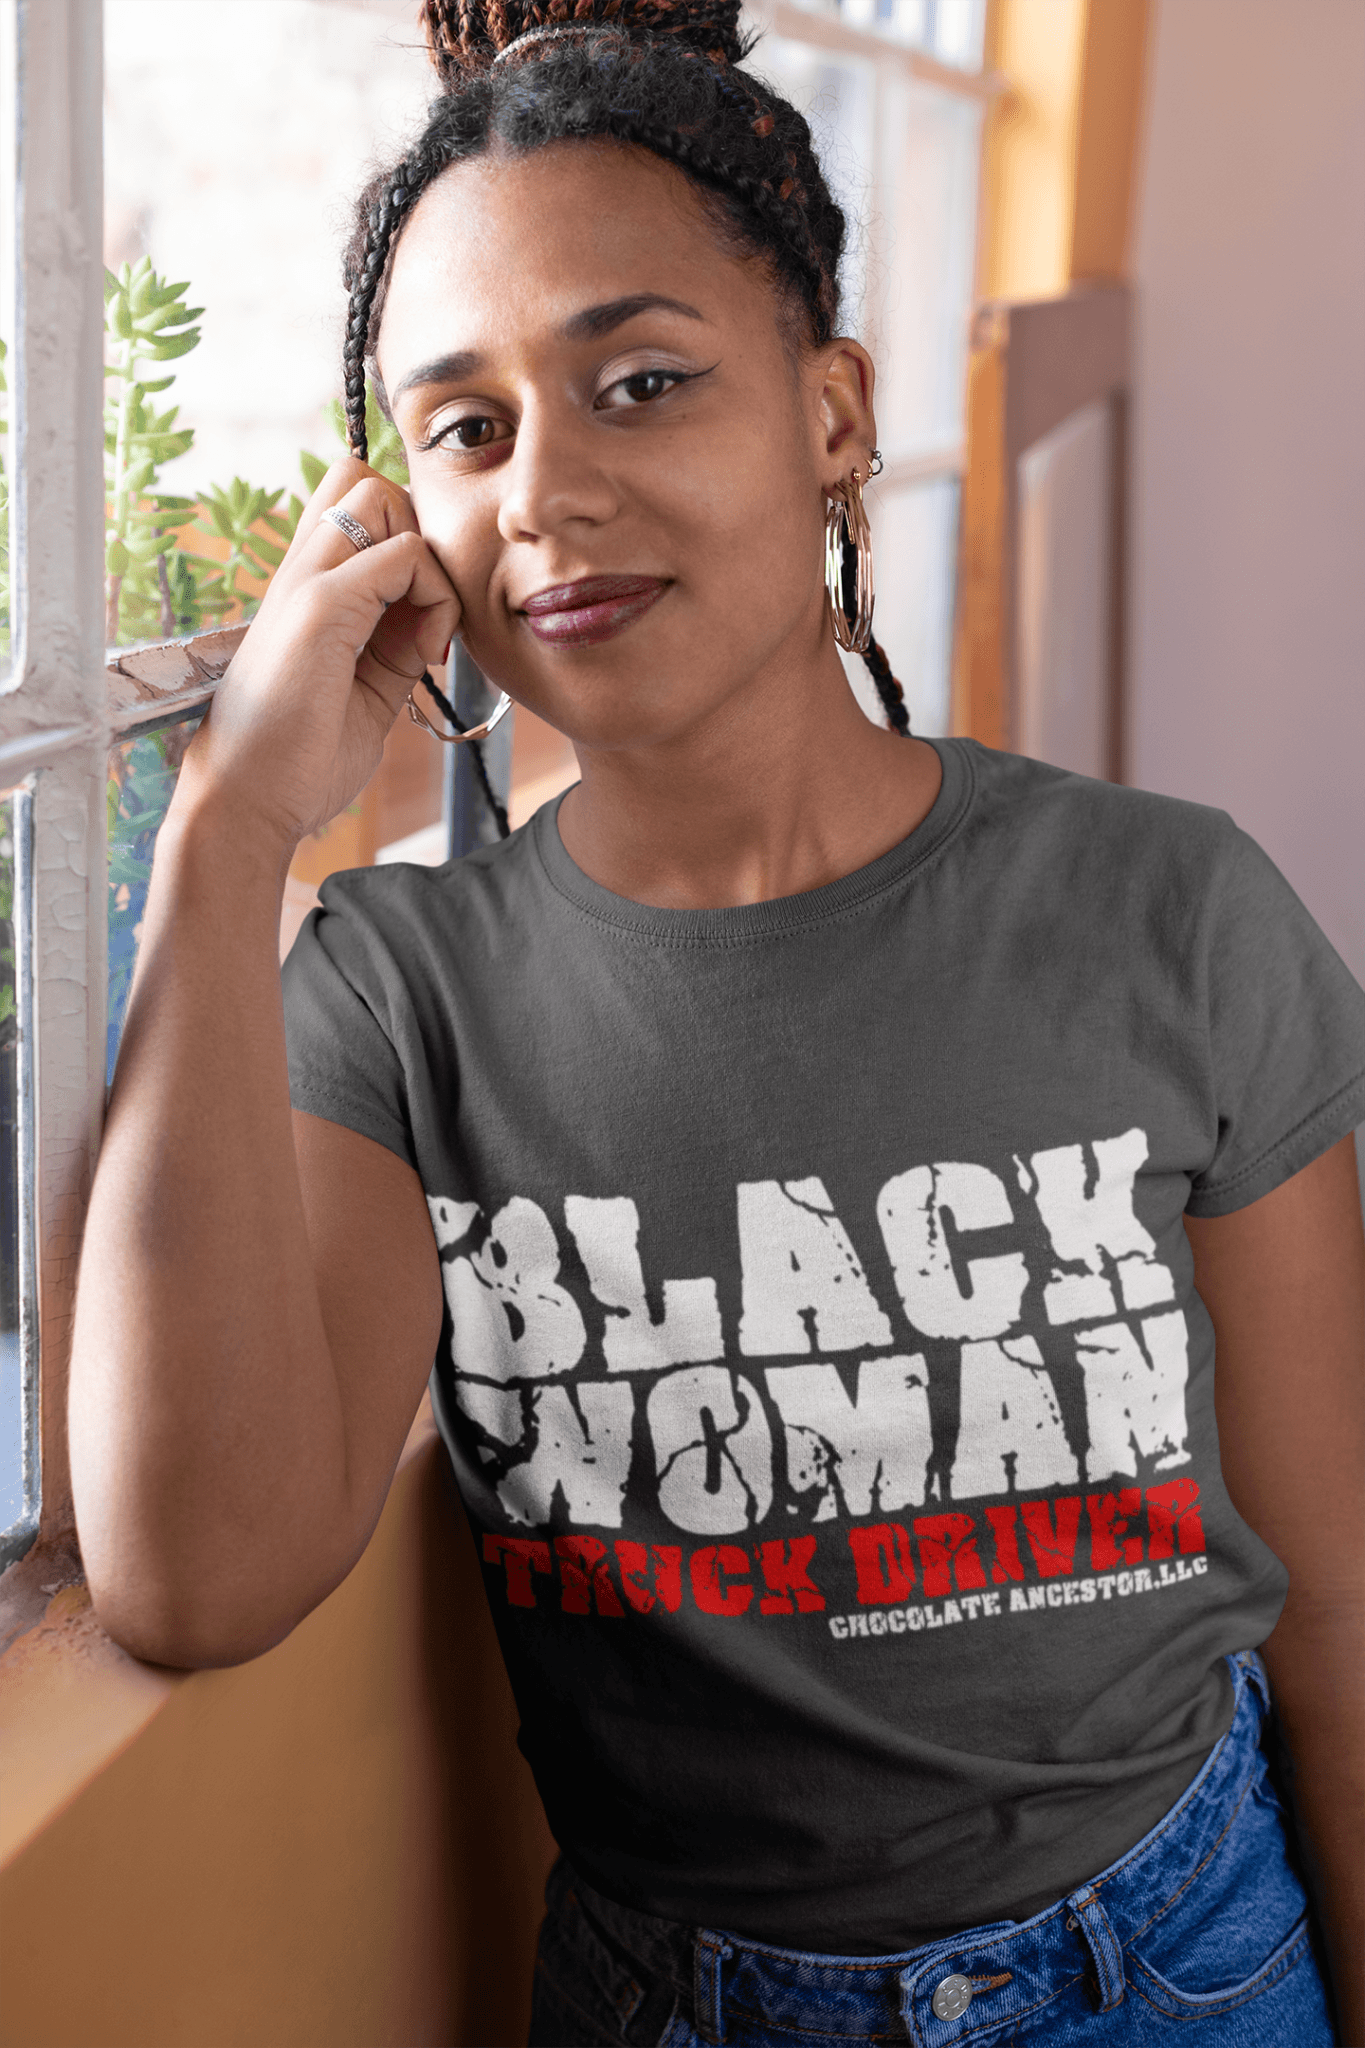 Black Woman Truck Driver Short-Sleeve T-Shirt - Chocolate Ancestor